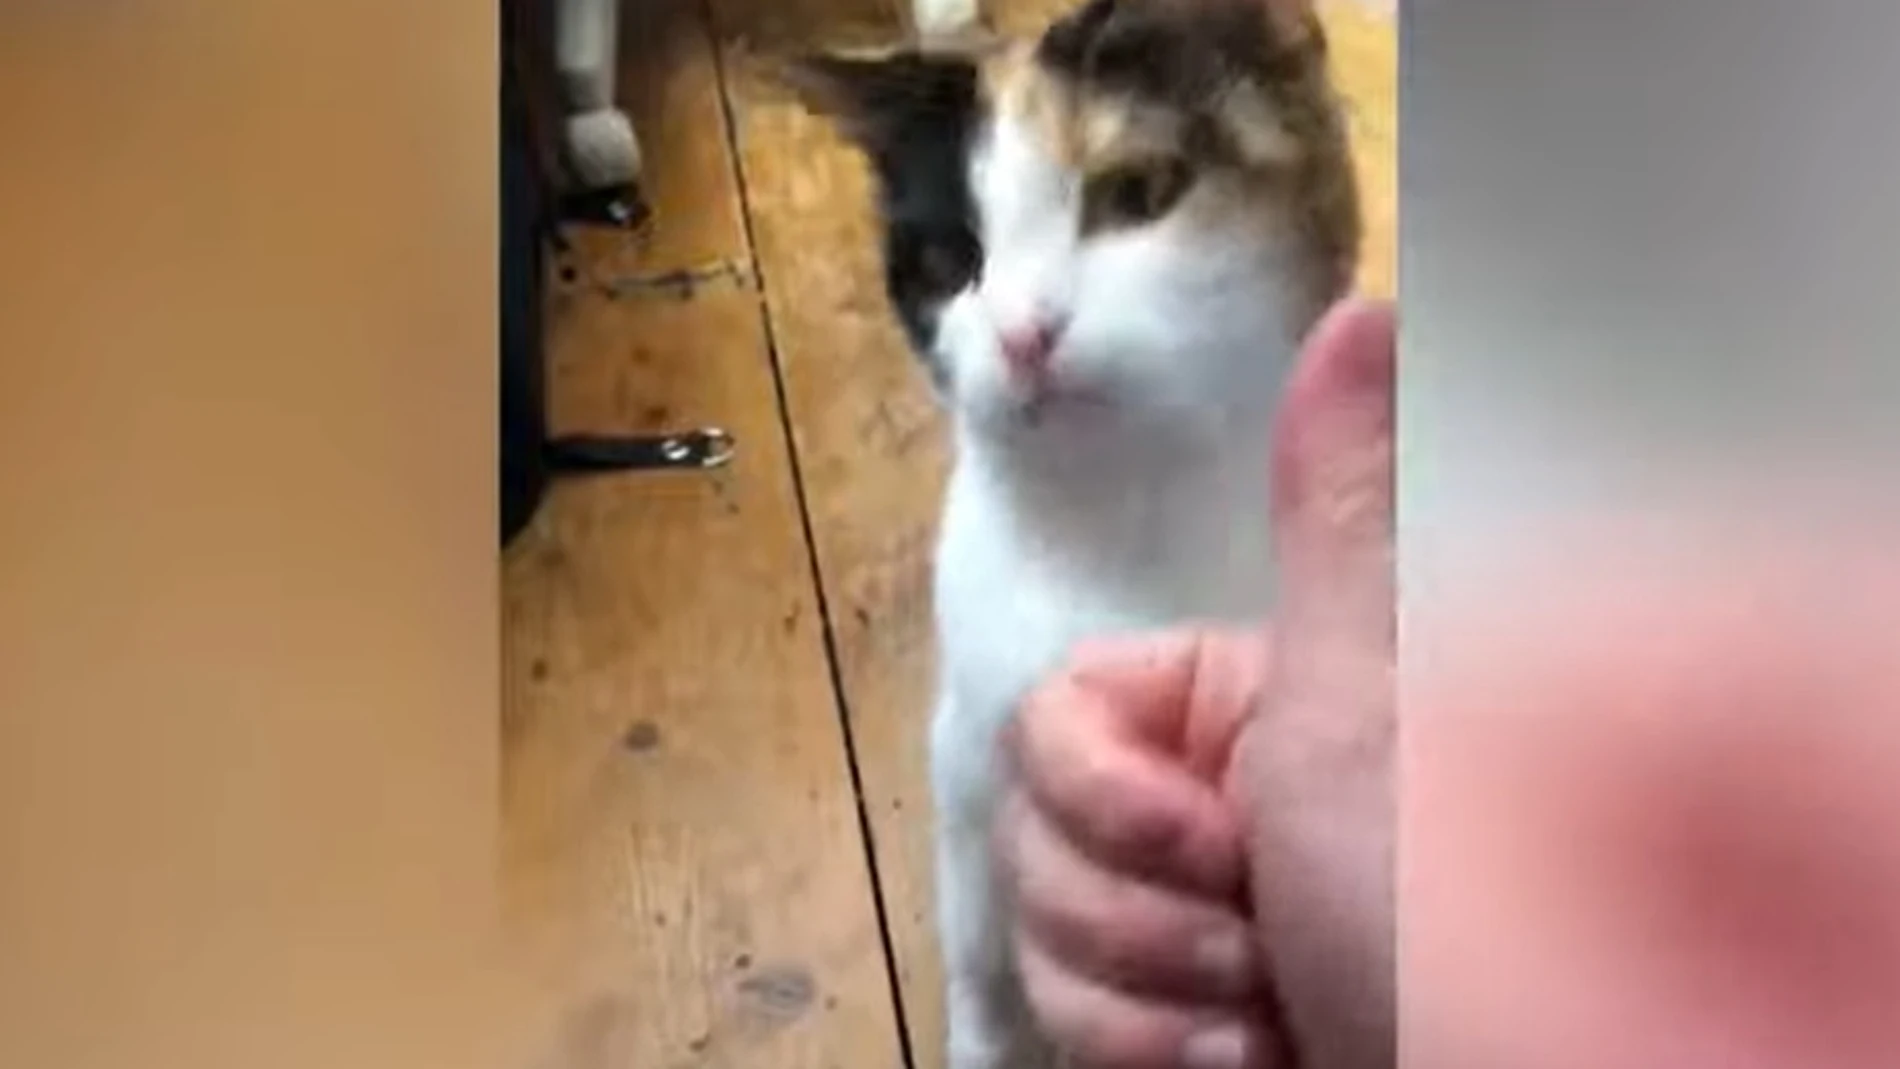 Kafka, la gata sorda que ha aprendido lenguaje de signos